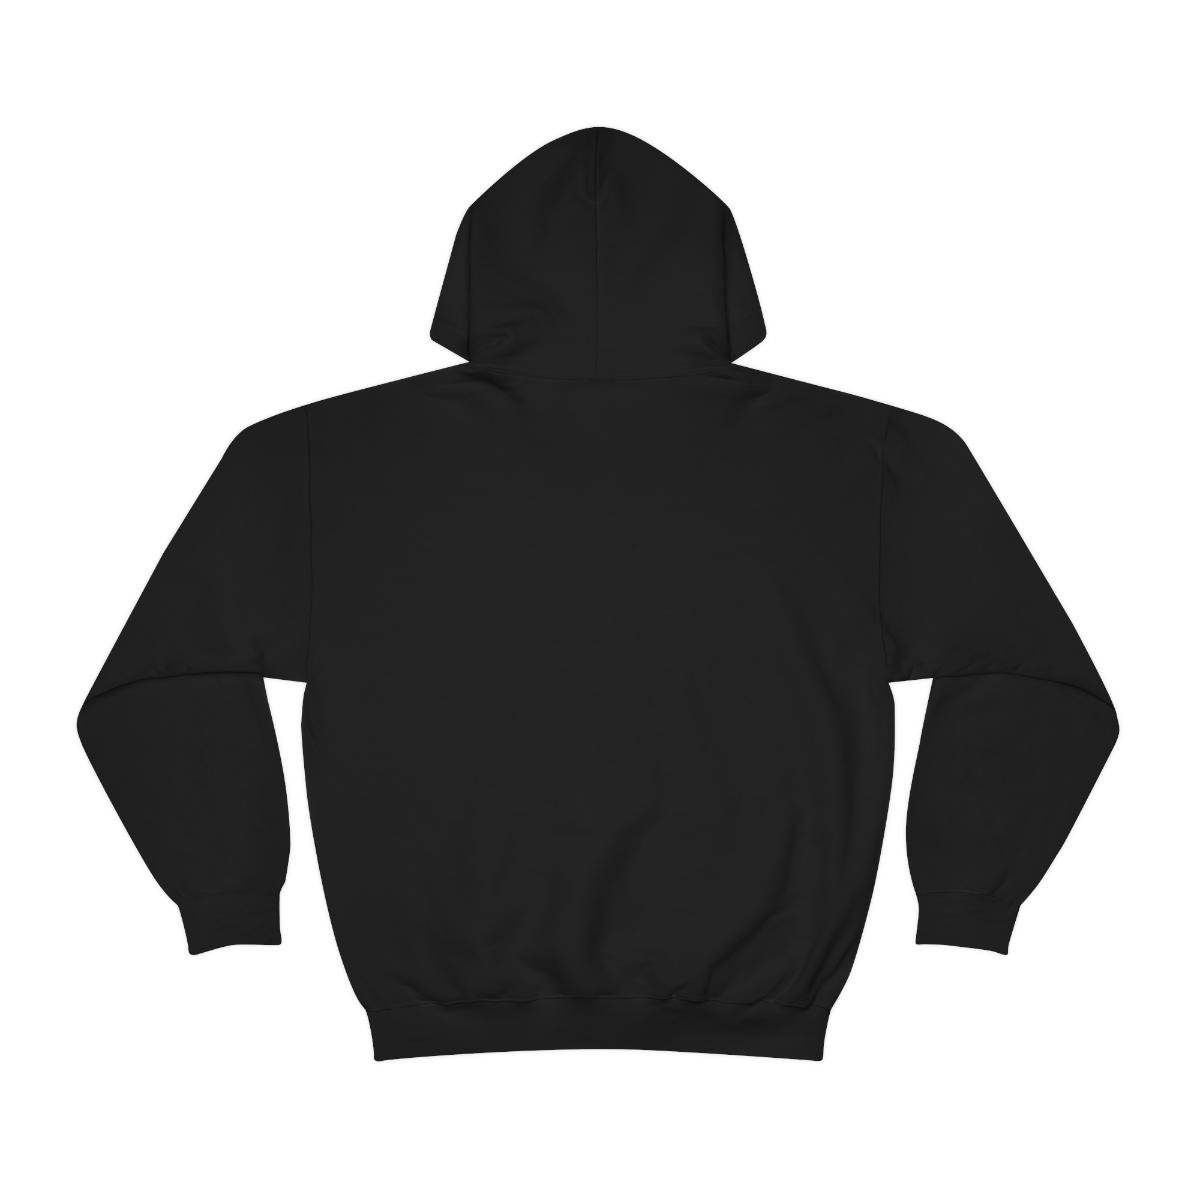 Crumbacher – Tame The Volcano Pullover Hooded Sweatshirt